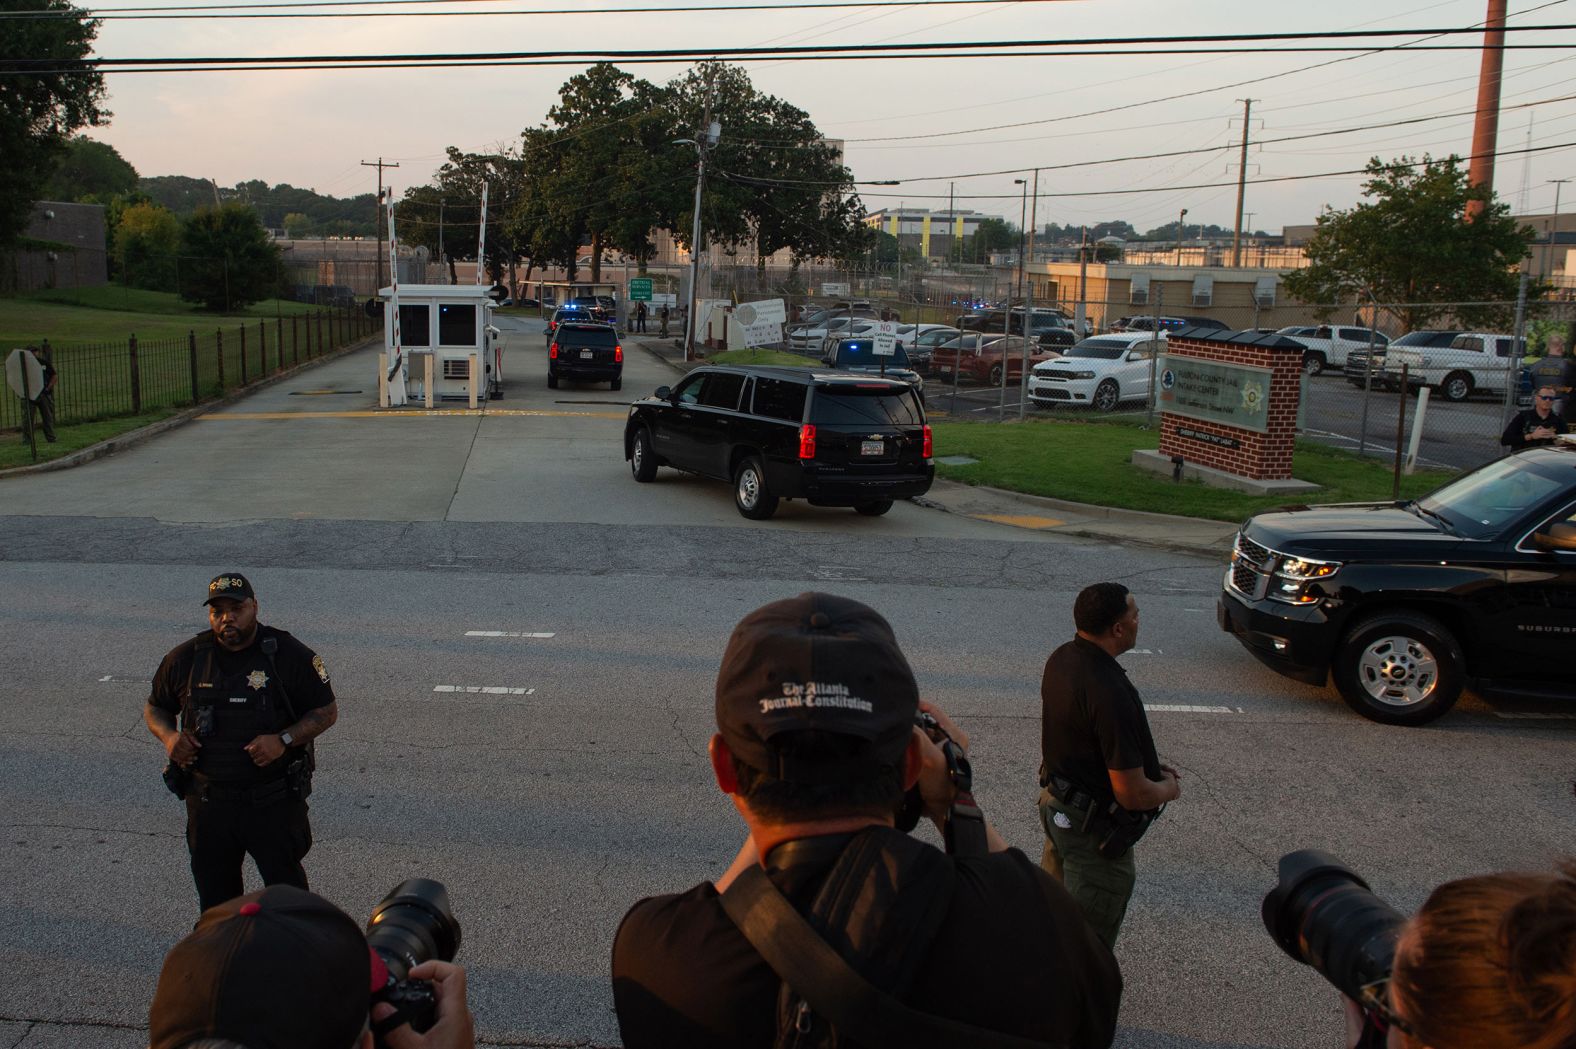 Trump's motorcade arrives at the Fulton County jail in Atlanta on Thursday.